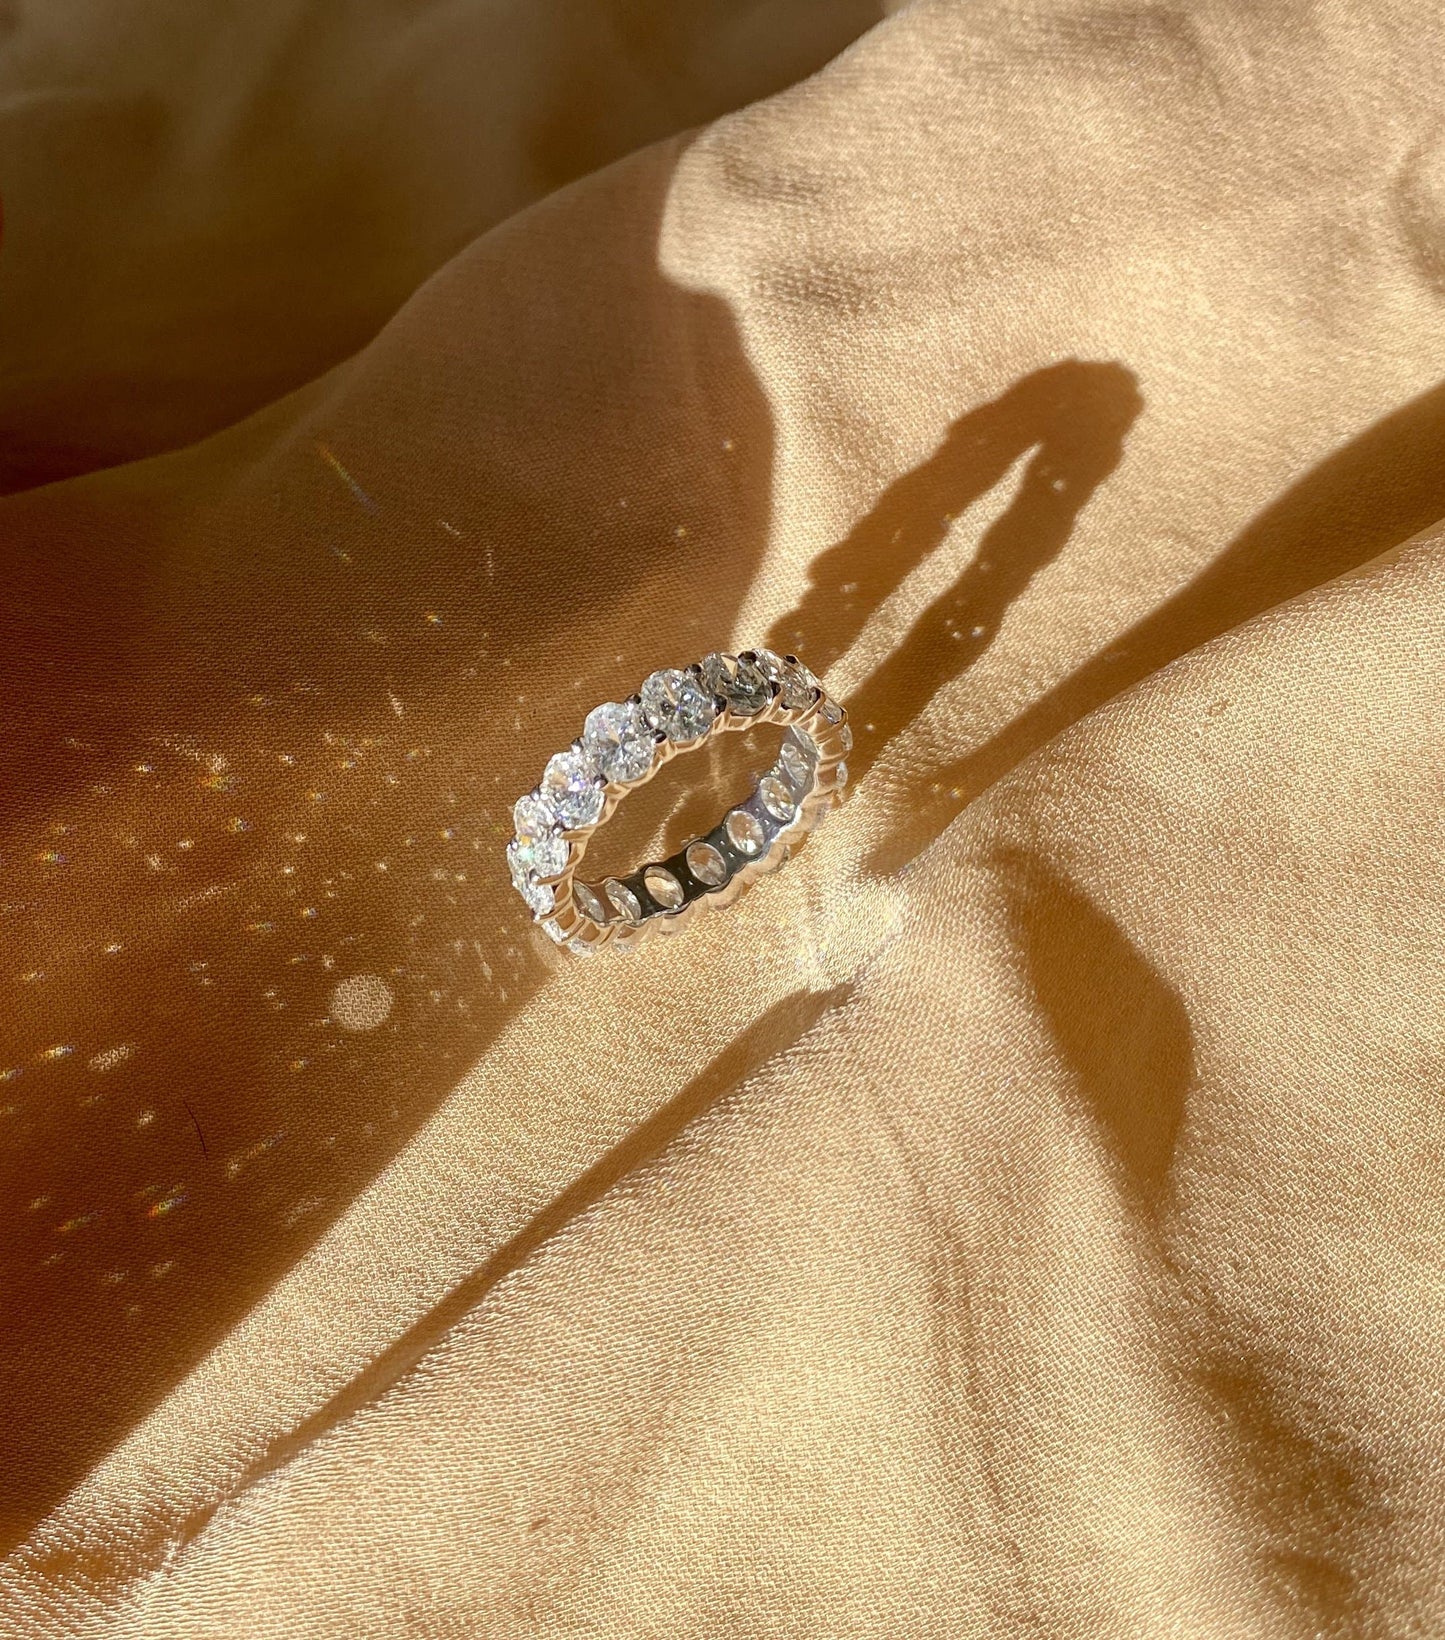 4ct Oval Cut Diamond Eternity Ring in 14k Gold